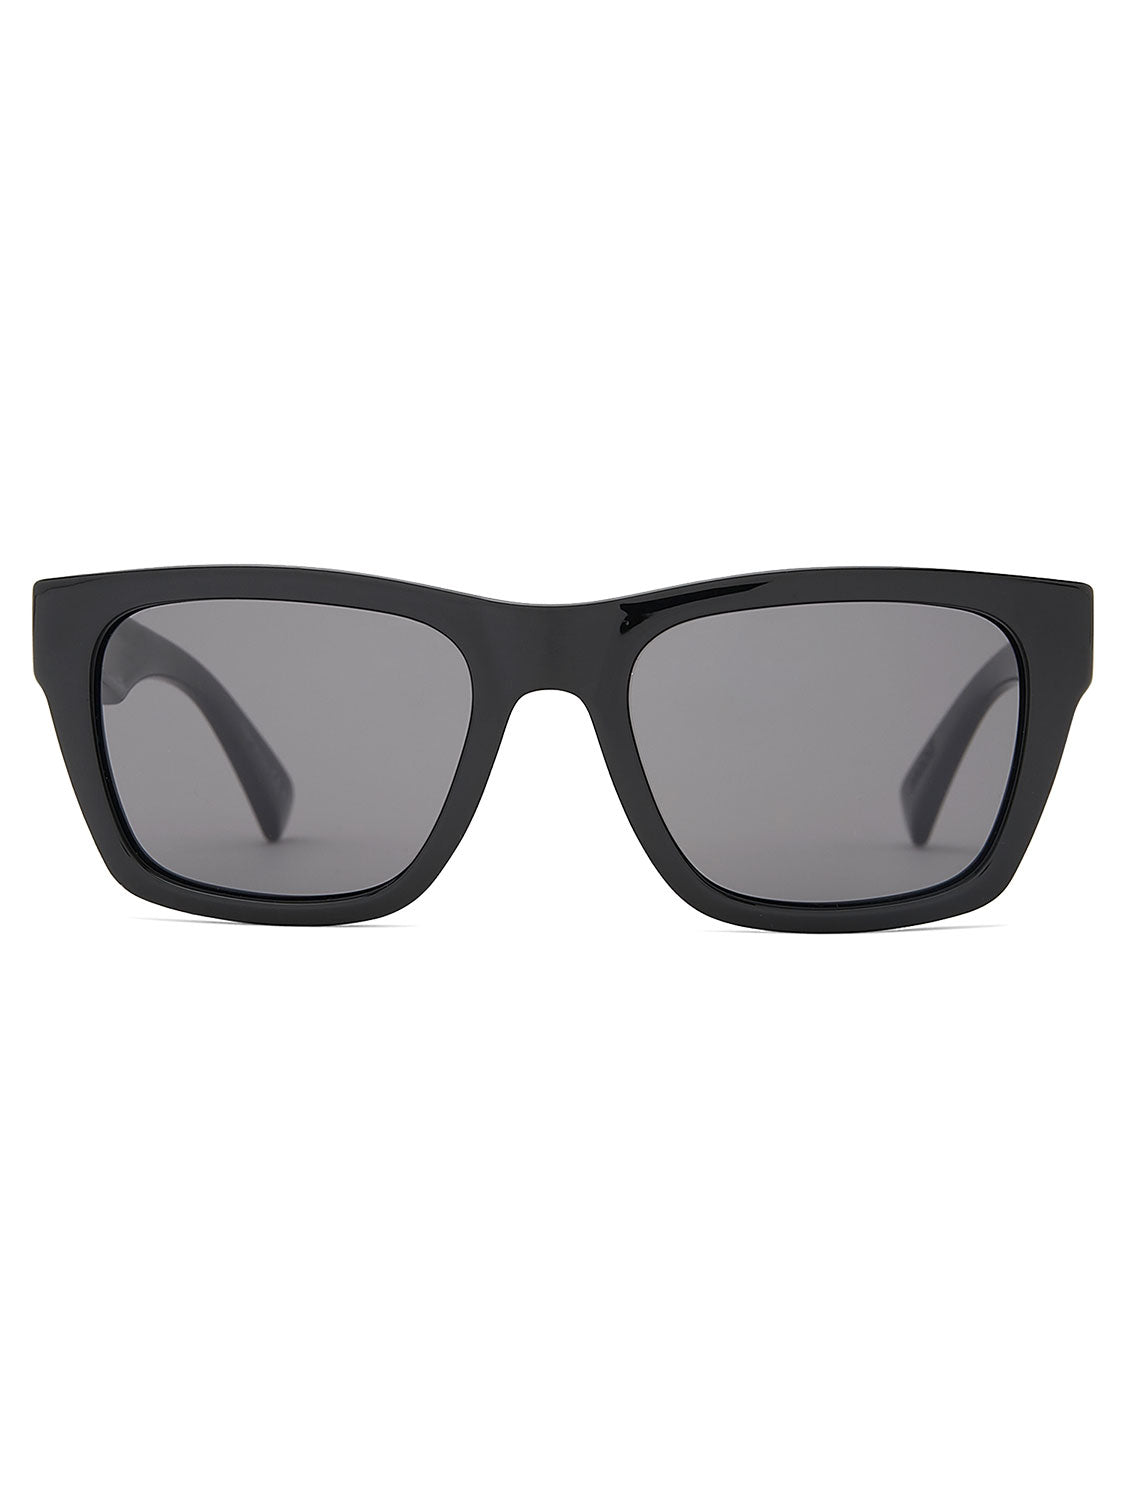 VonZipper Unisex Mode Sunglasses